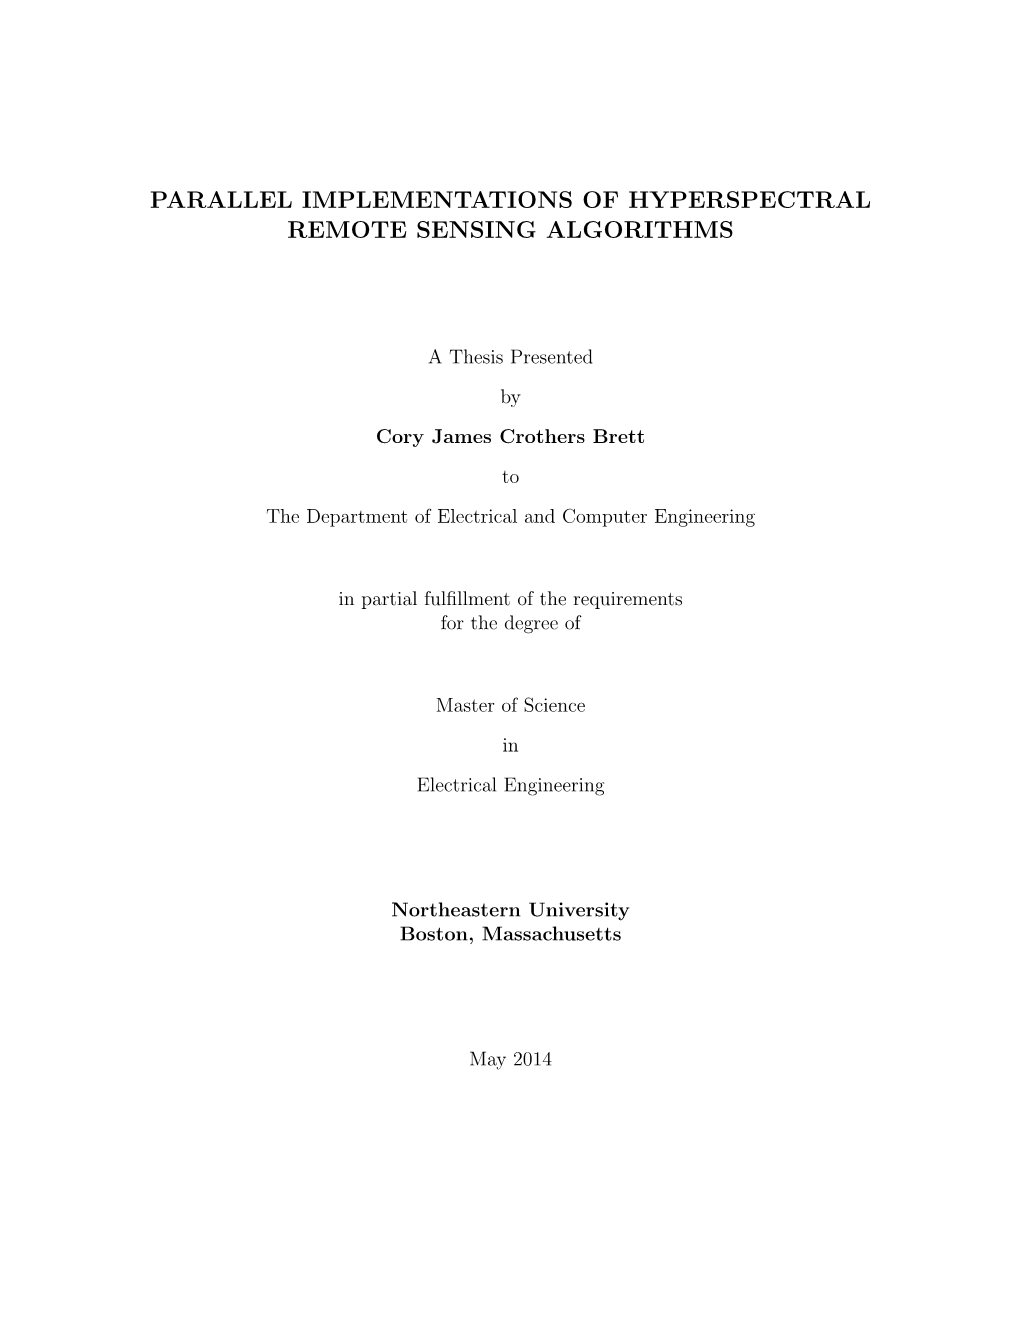 Parallel Implementations of Hyperspectral Remote Sensing Algorithms